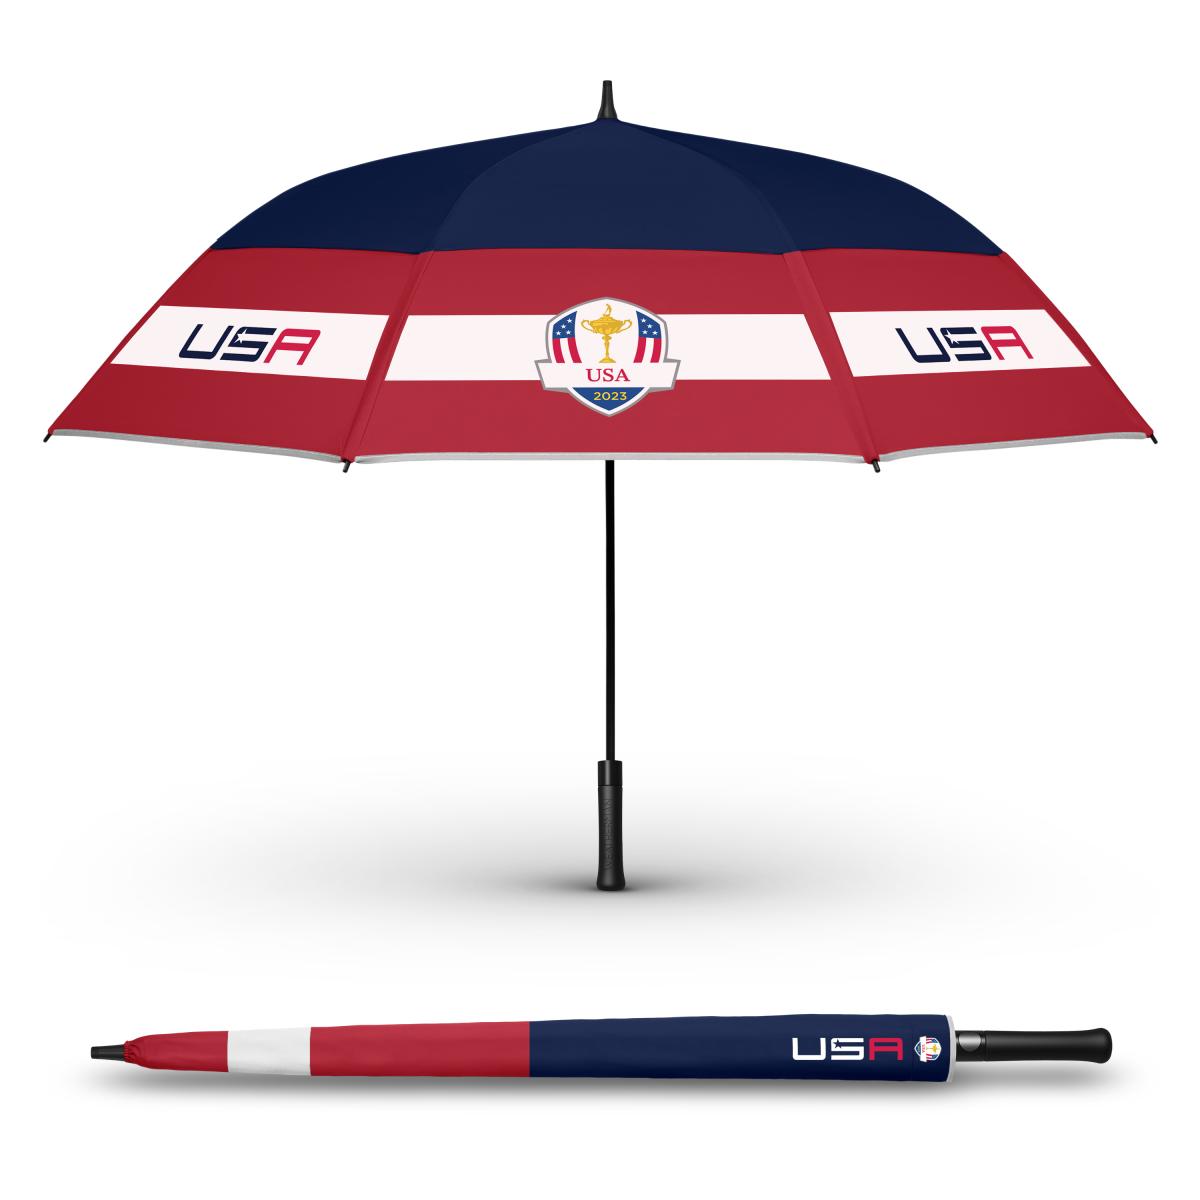 Weatherman umbrellas, official umbrellas of the Ryder Cup